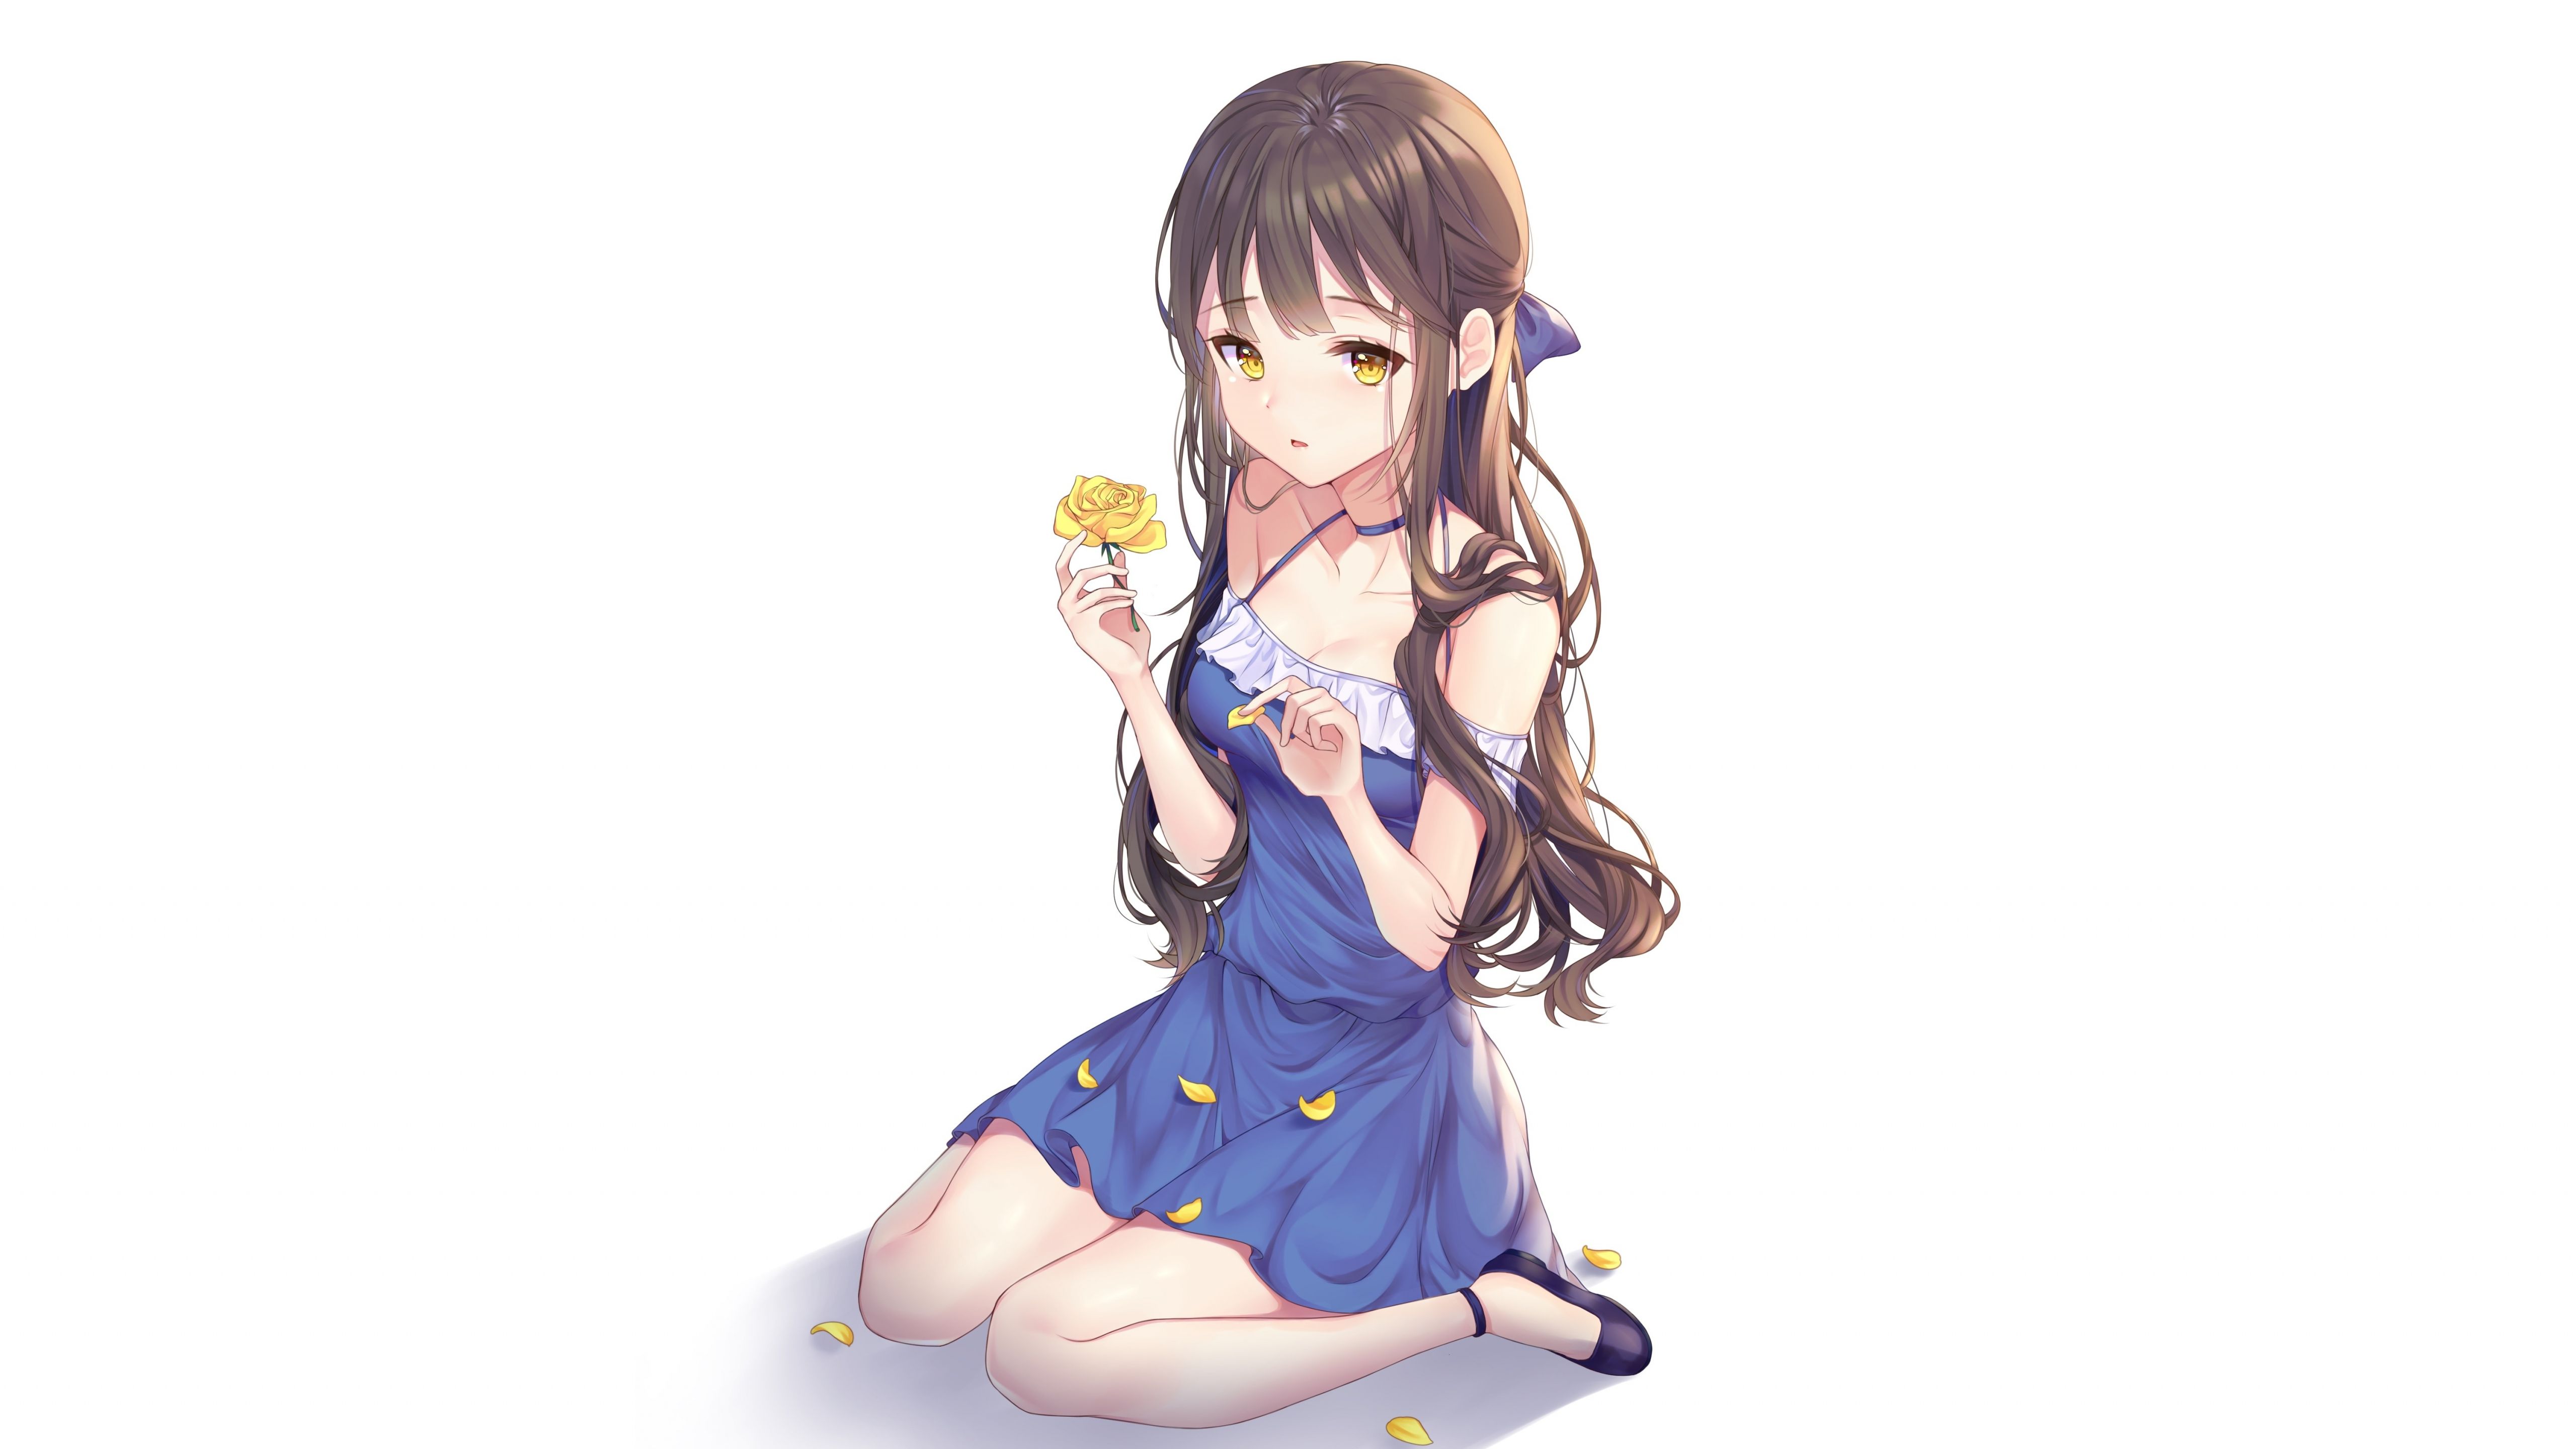 Download 5120x2880 wallpaper yellow flower, cute, original, anime girl, 5k image, background, 7854